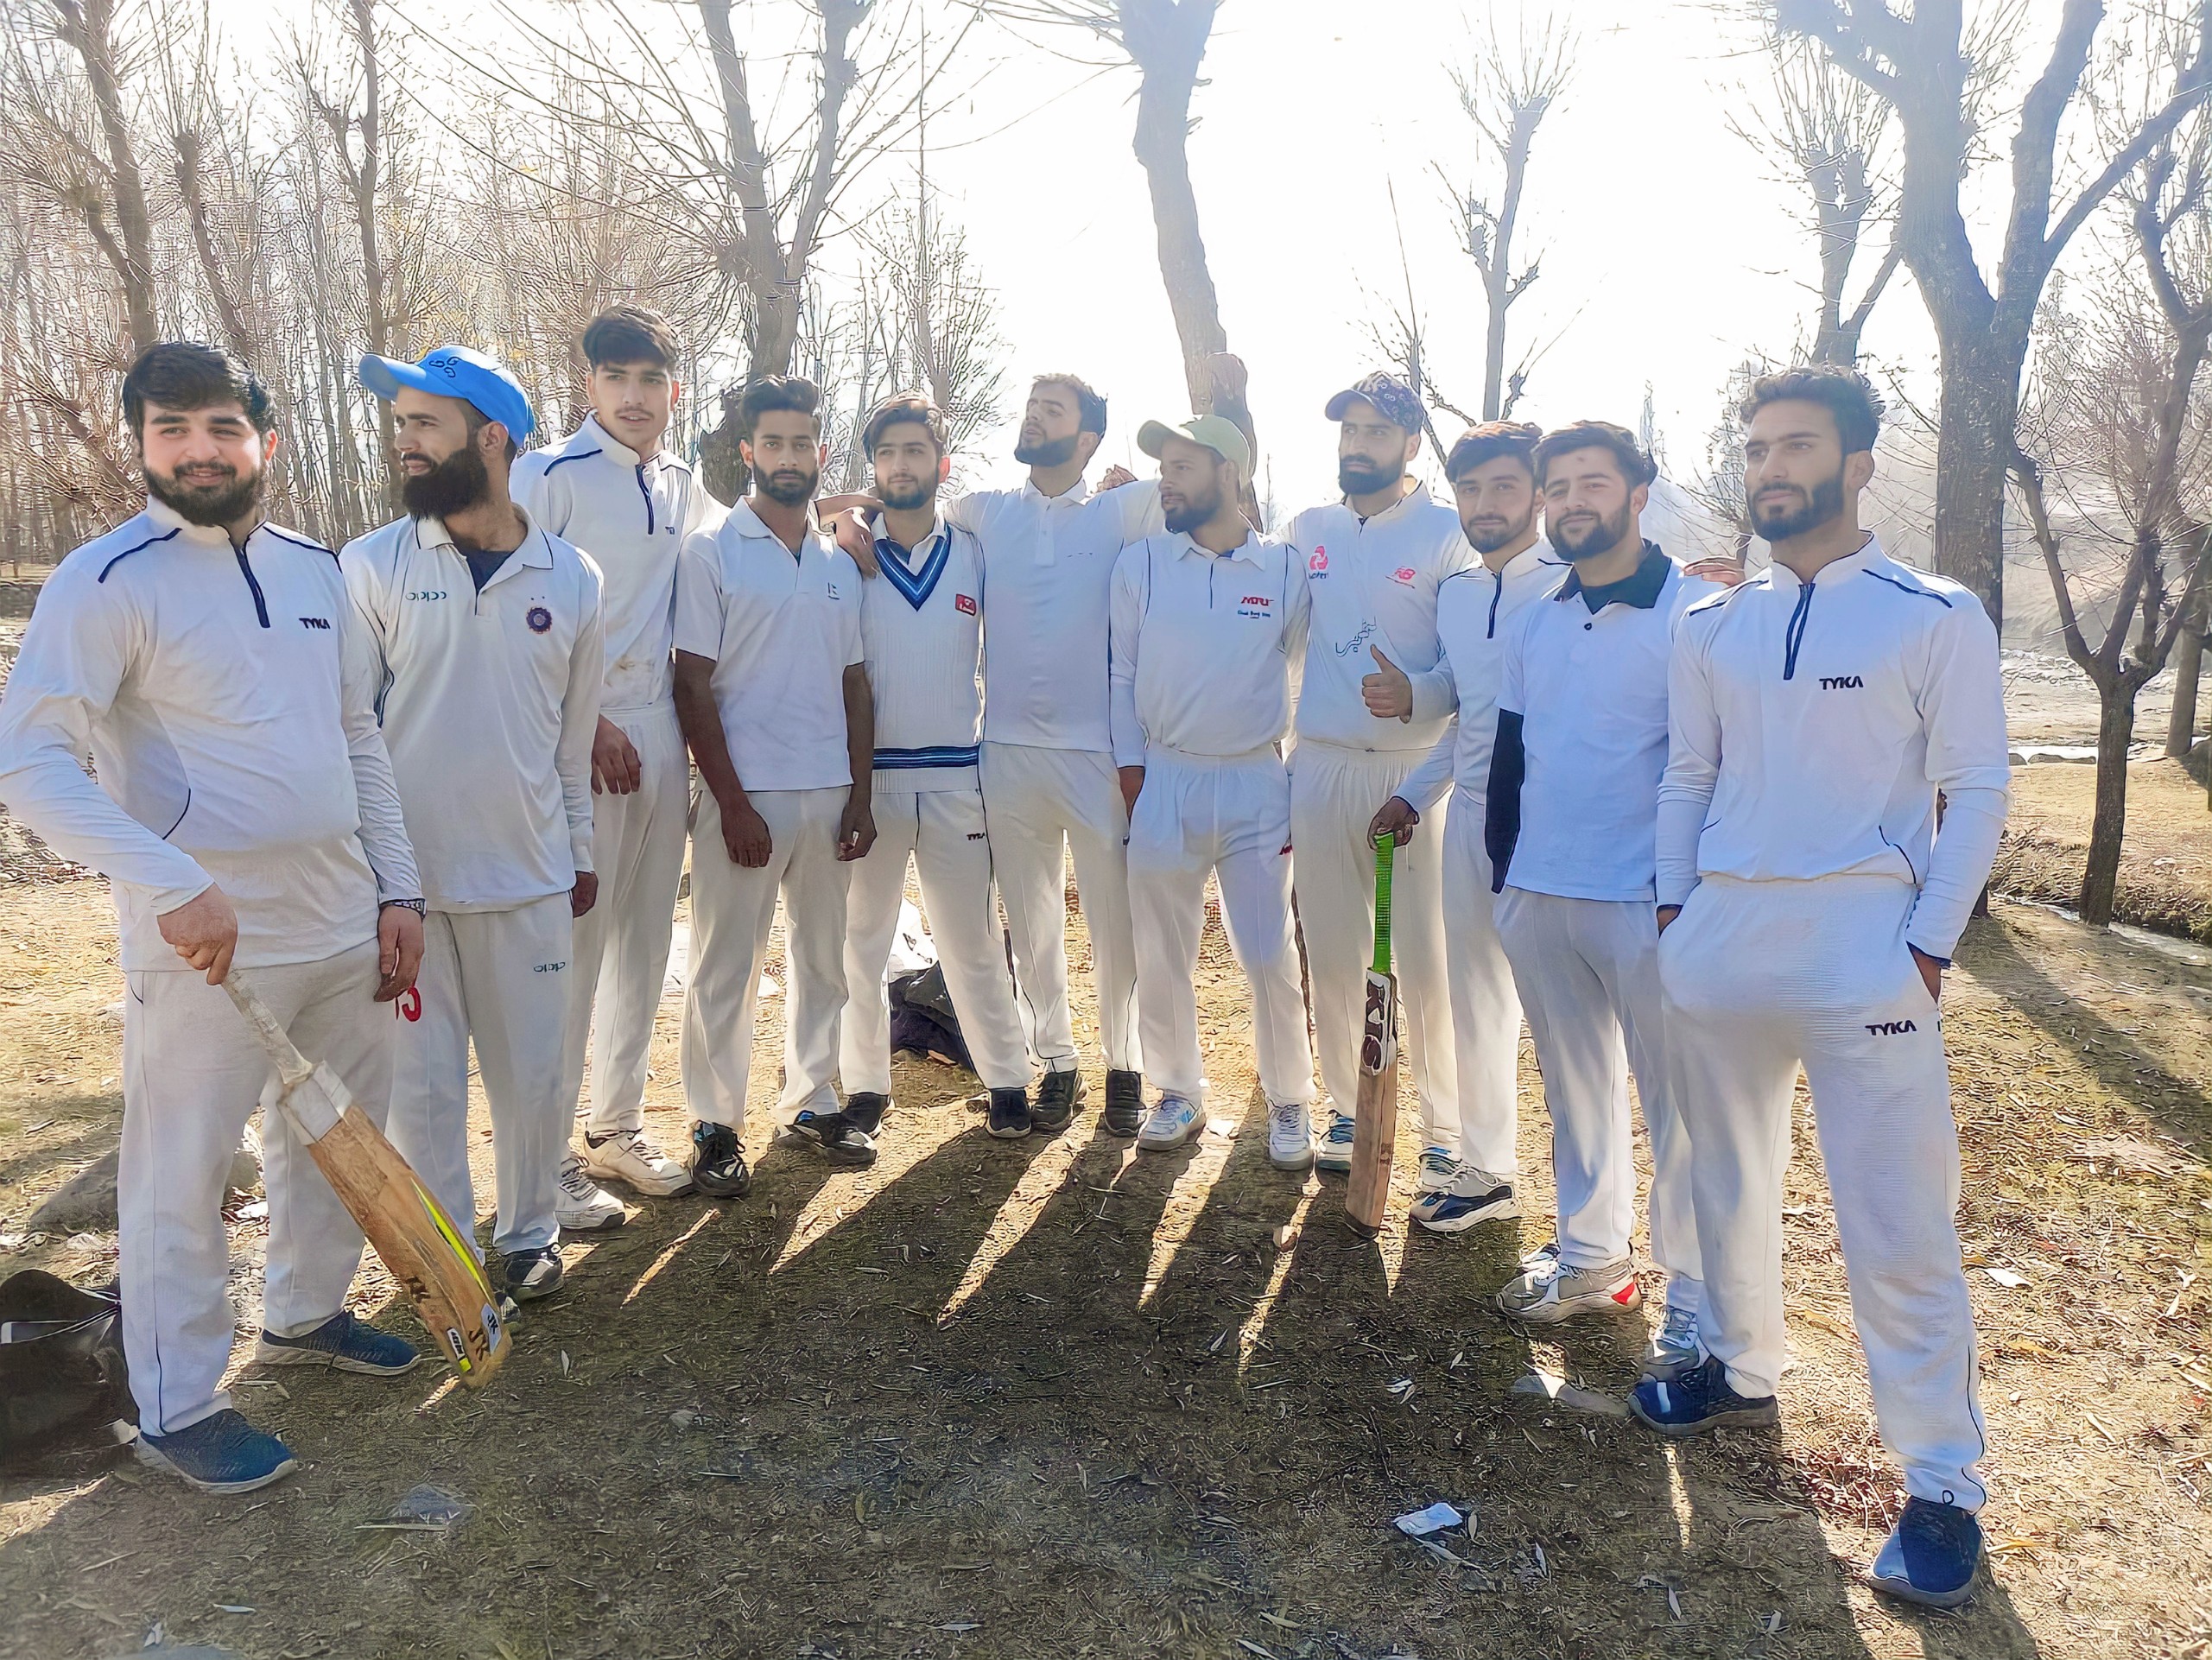 LCC larnoo cricket club